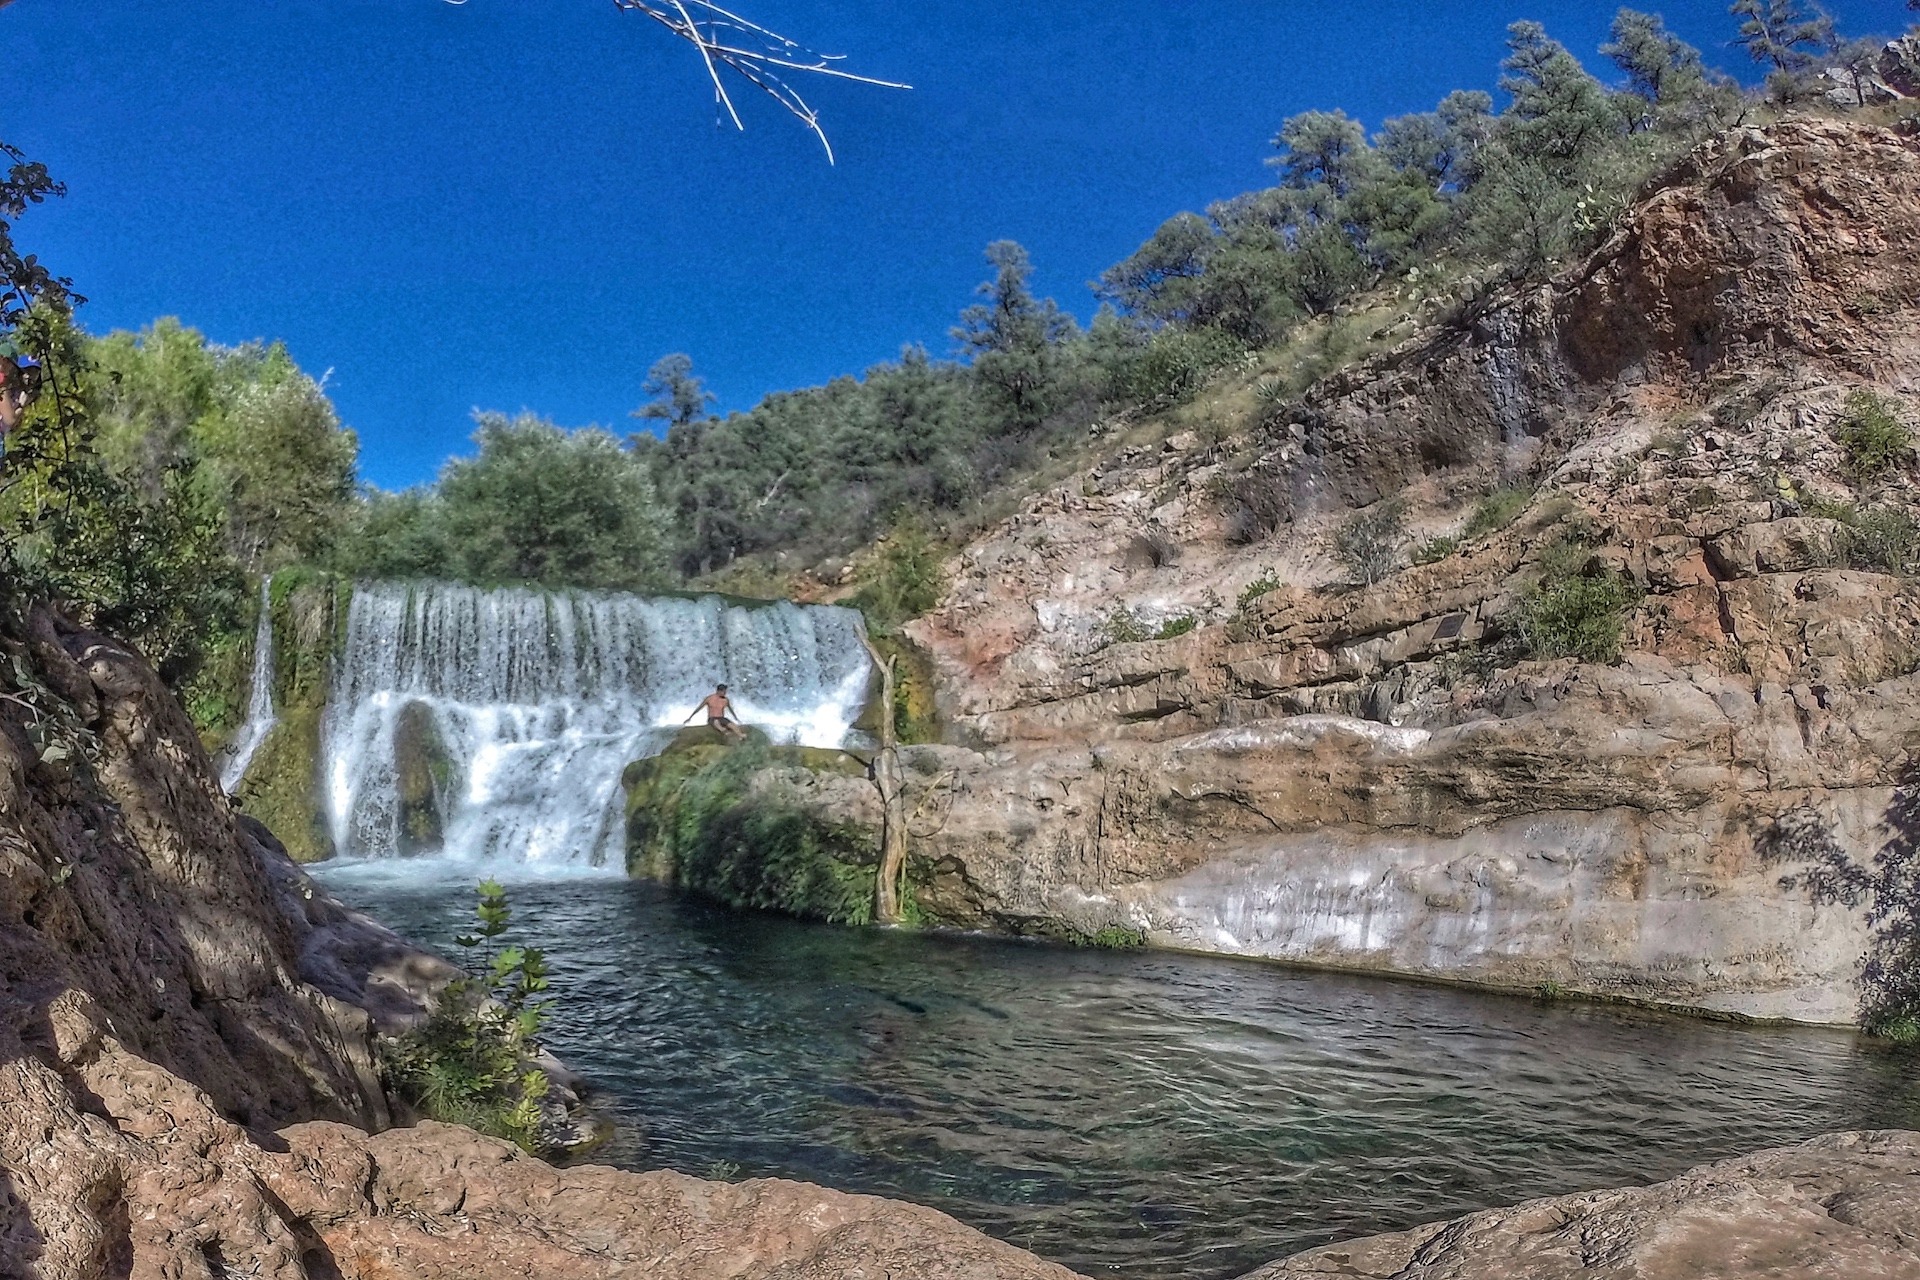 Fossil springs flickr az thermal pool sharing saved arizona